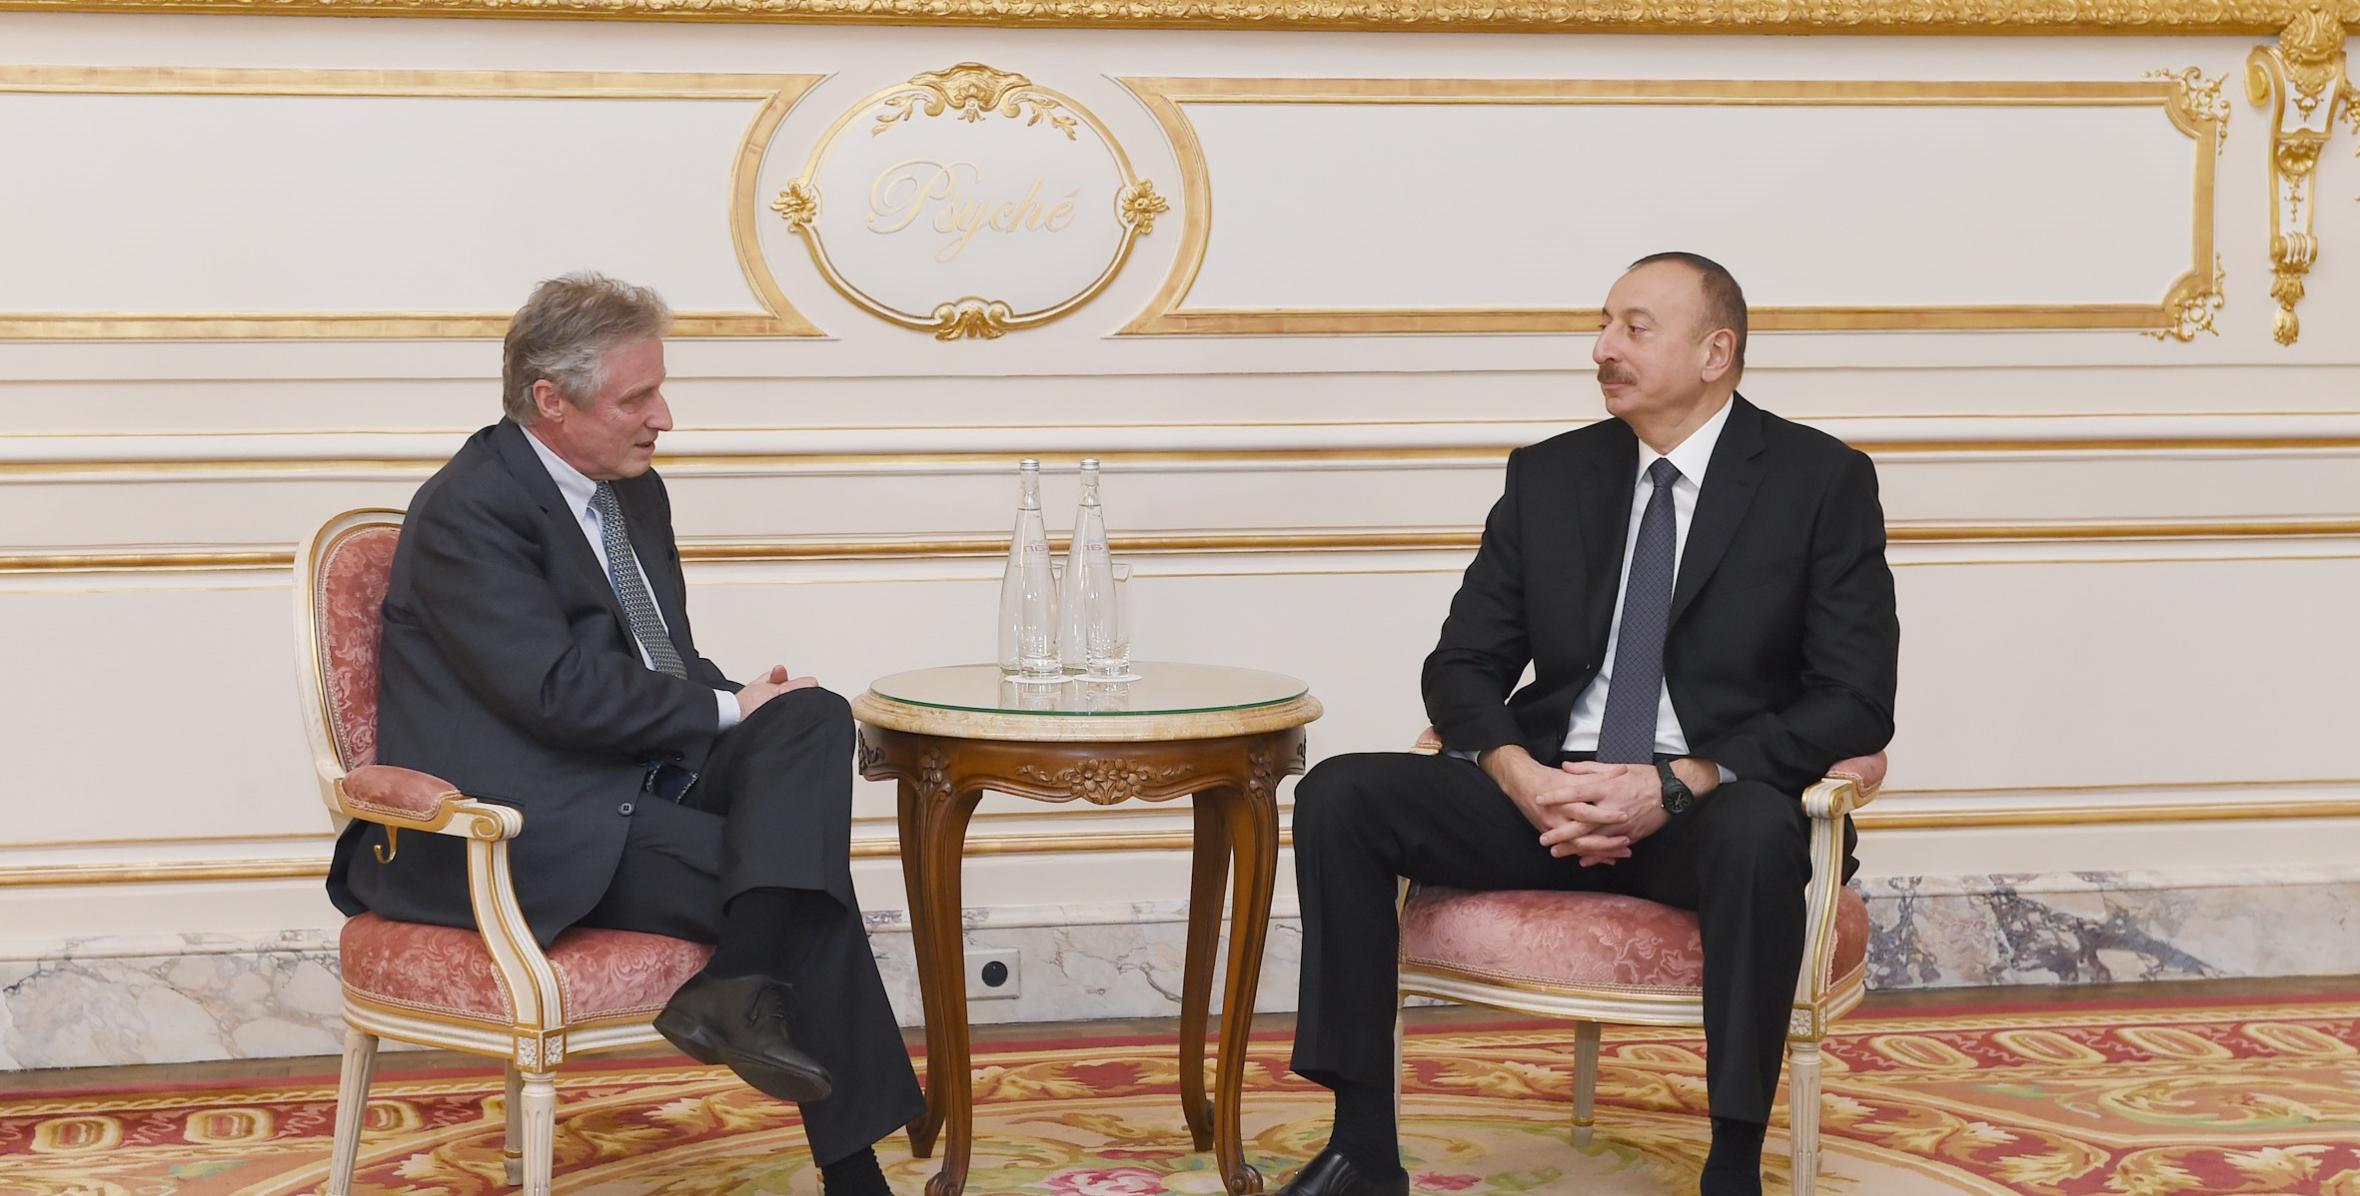 Ilham Aliyev met with Senior Executive Vice President of Thales International in Paris